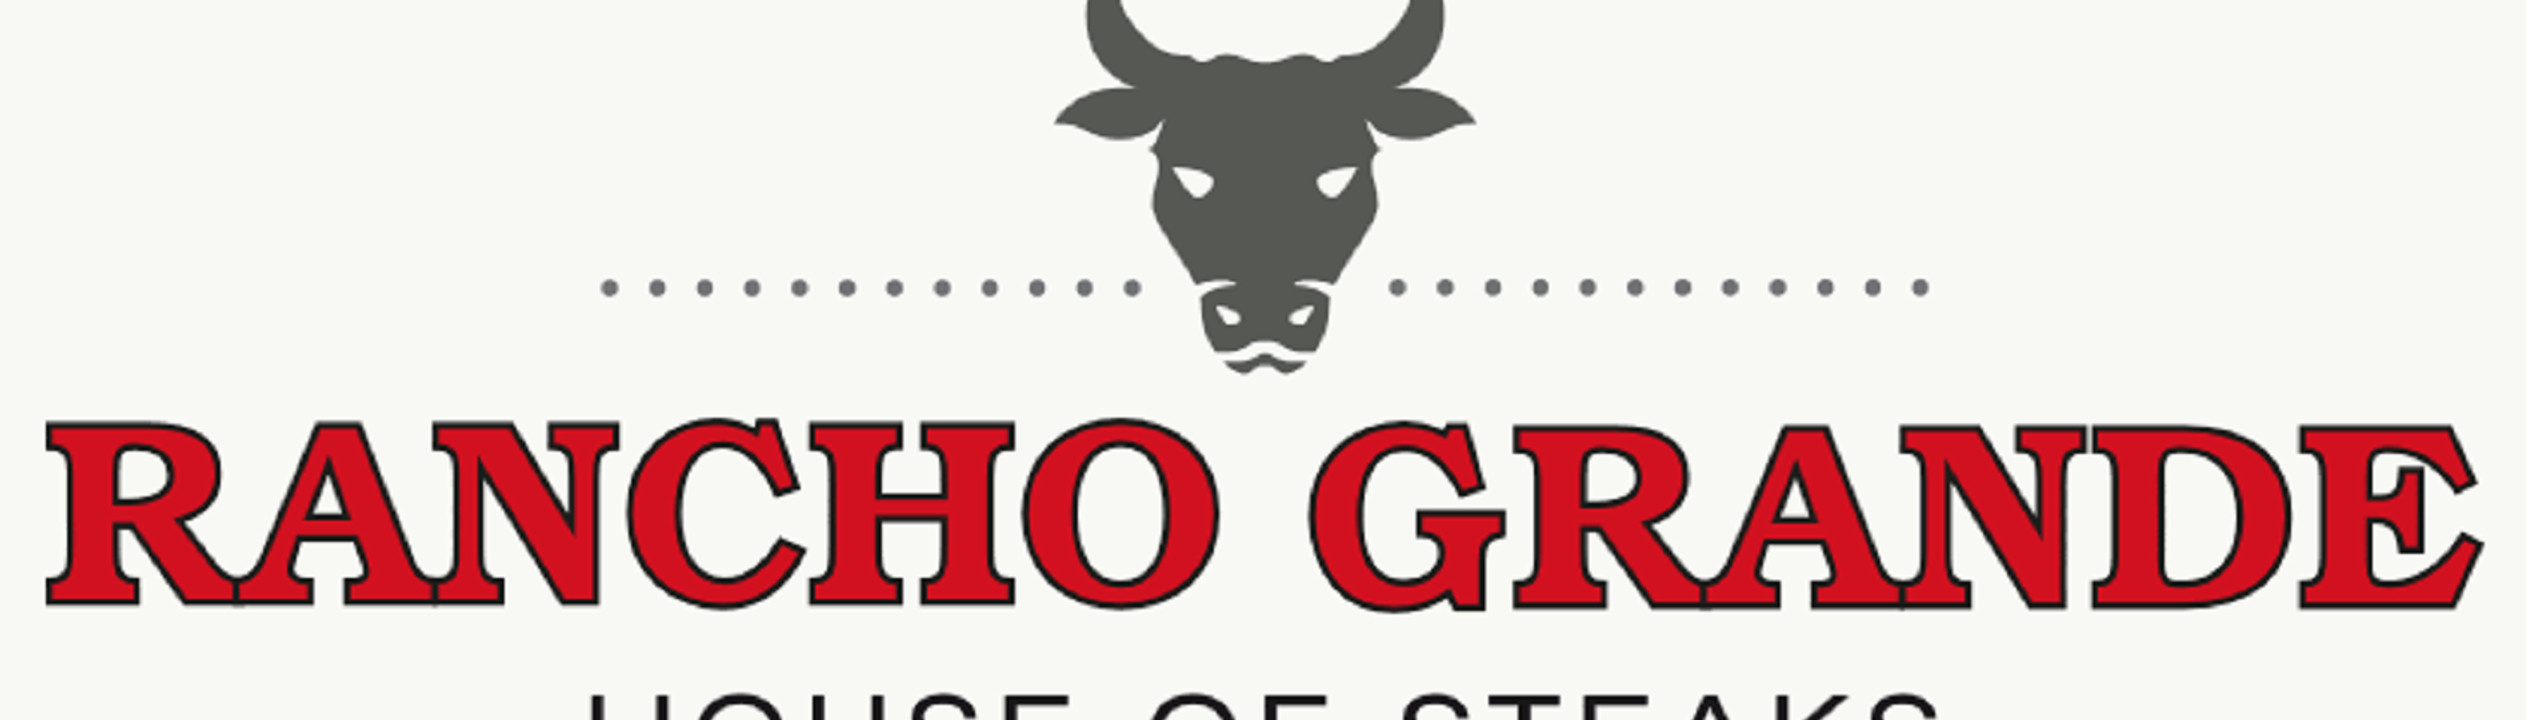 rancho-grande_logo